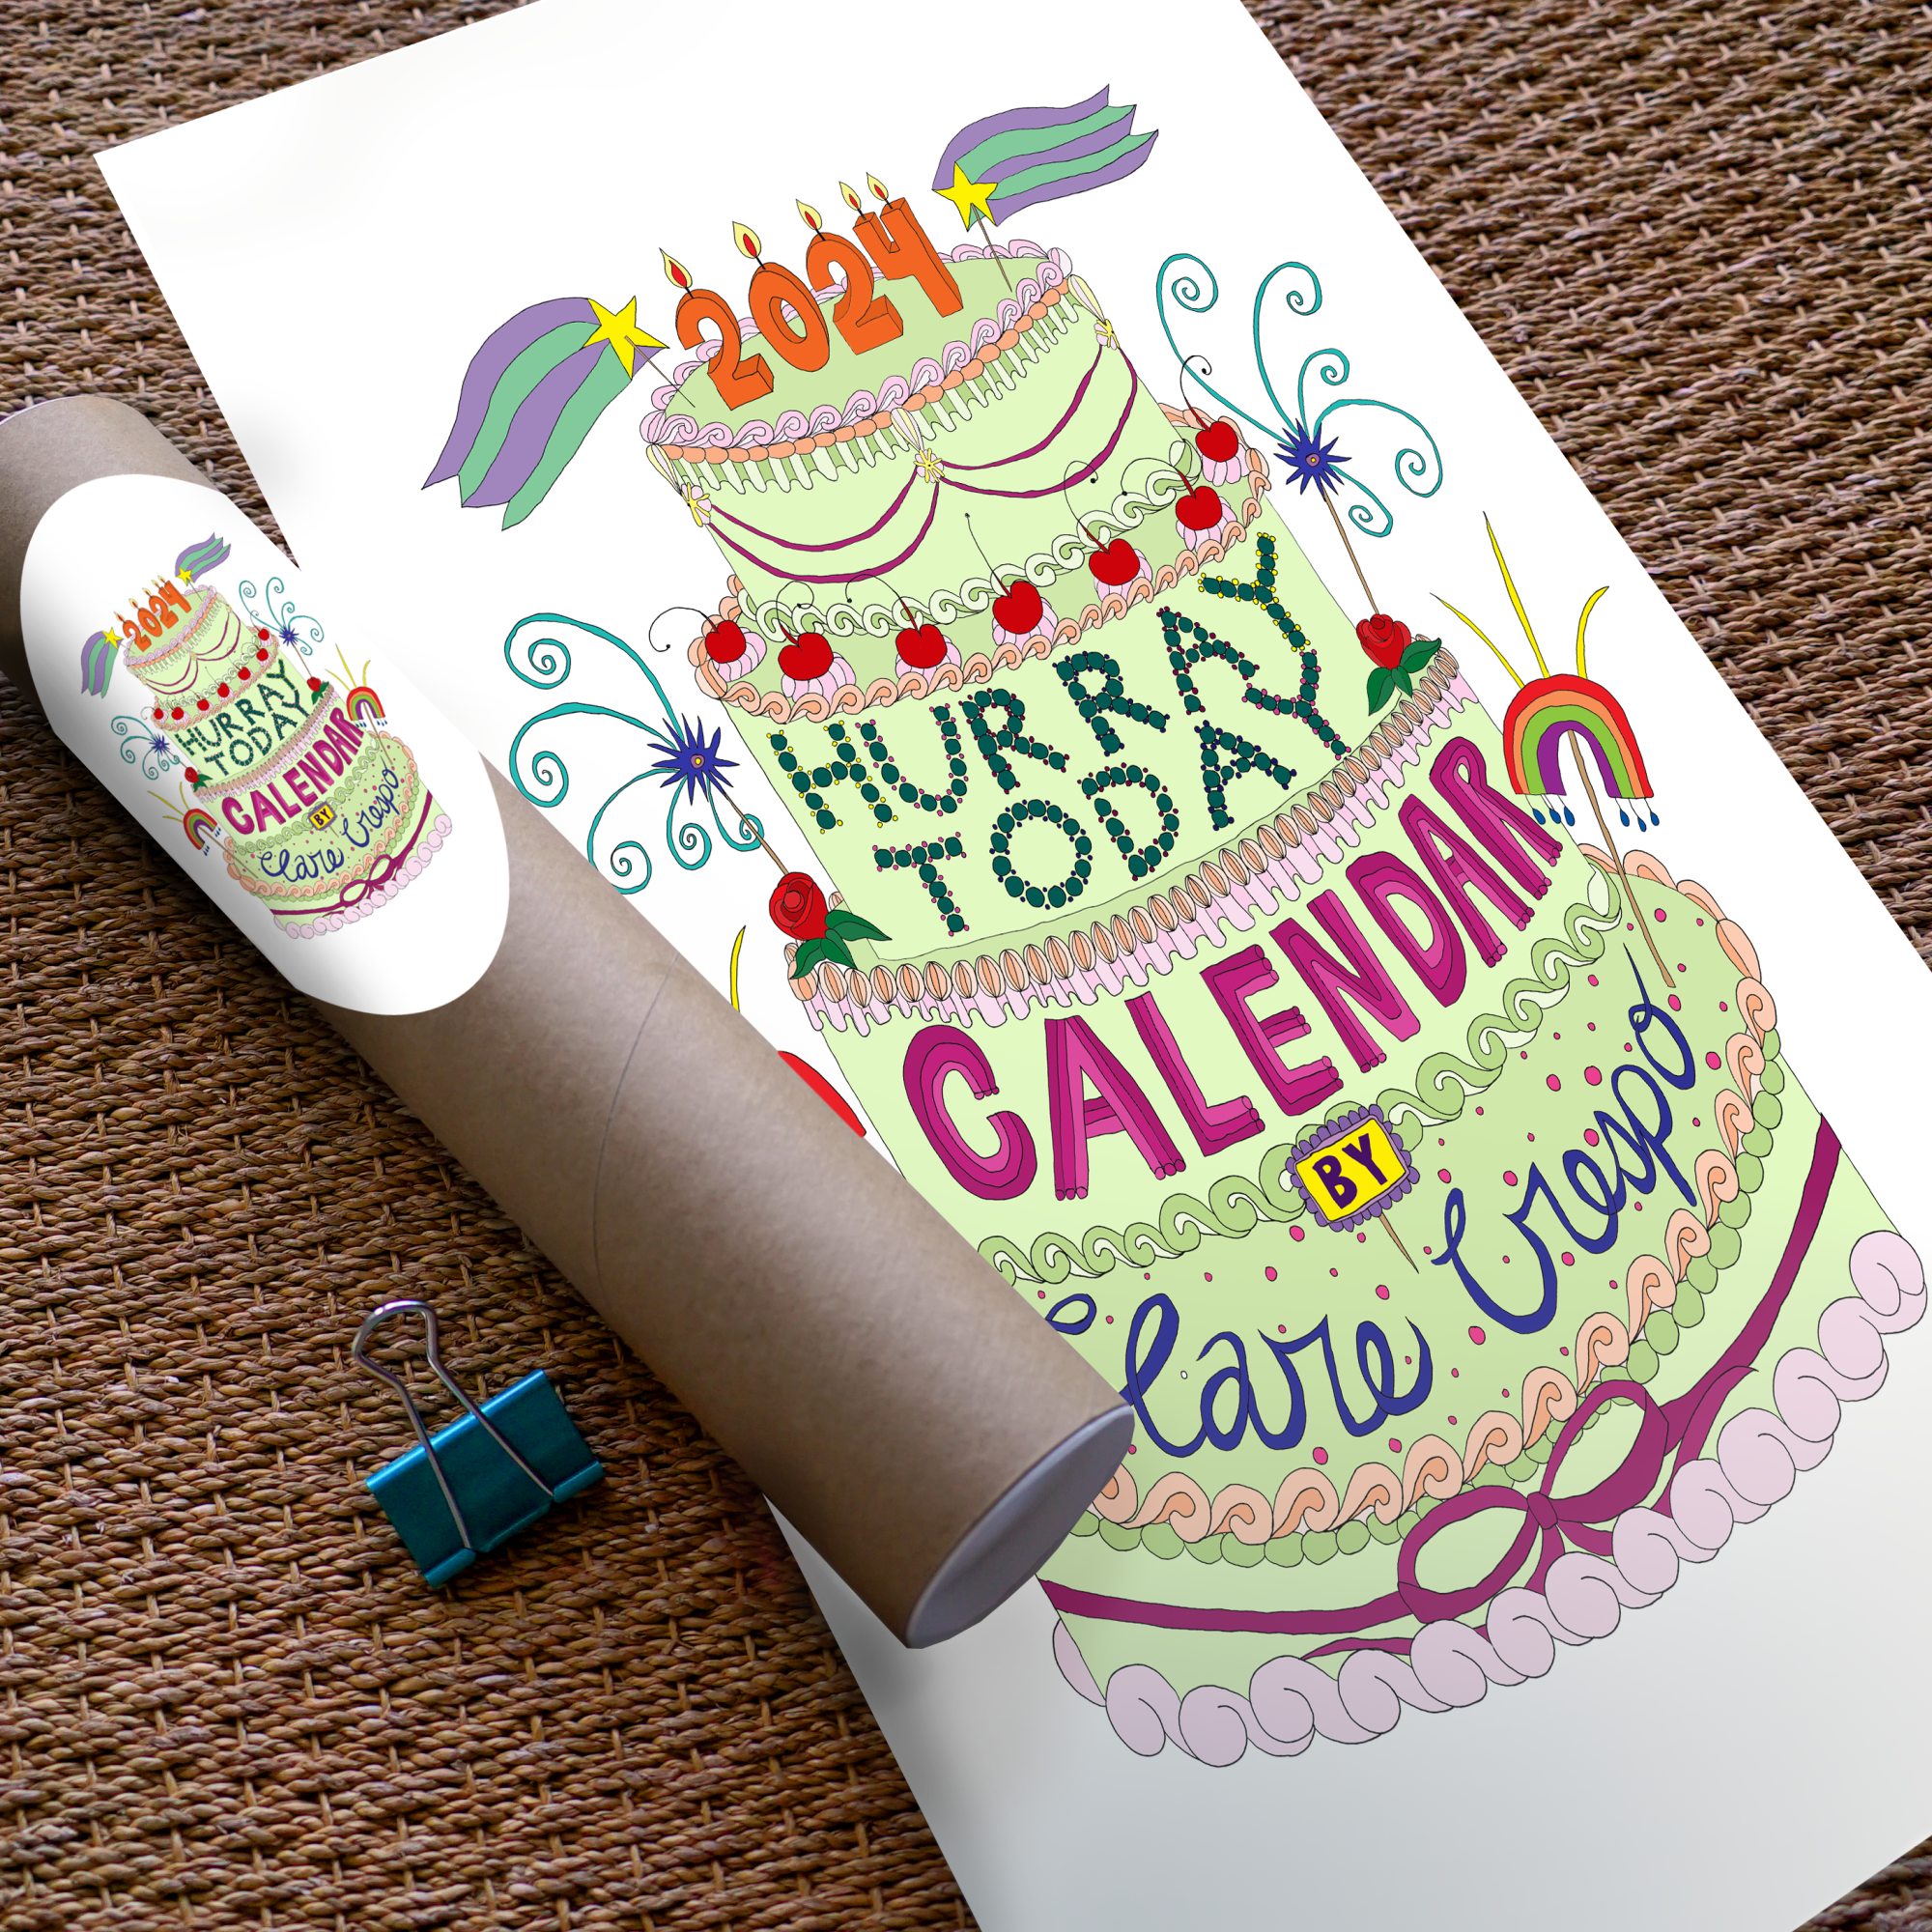 Clare Crespo's cake-themed calendar for 2024.